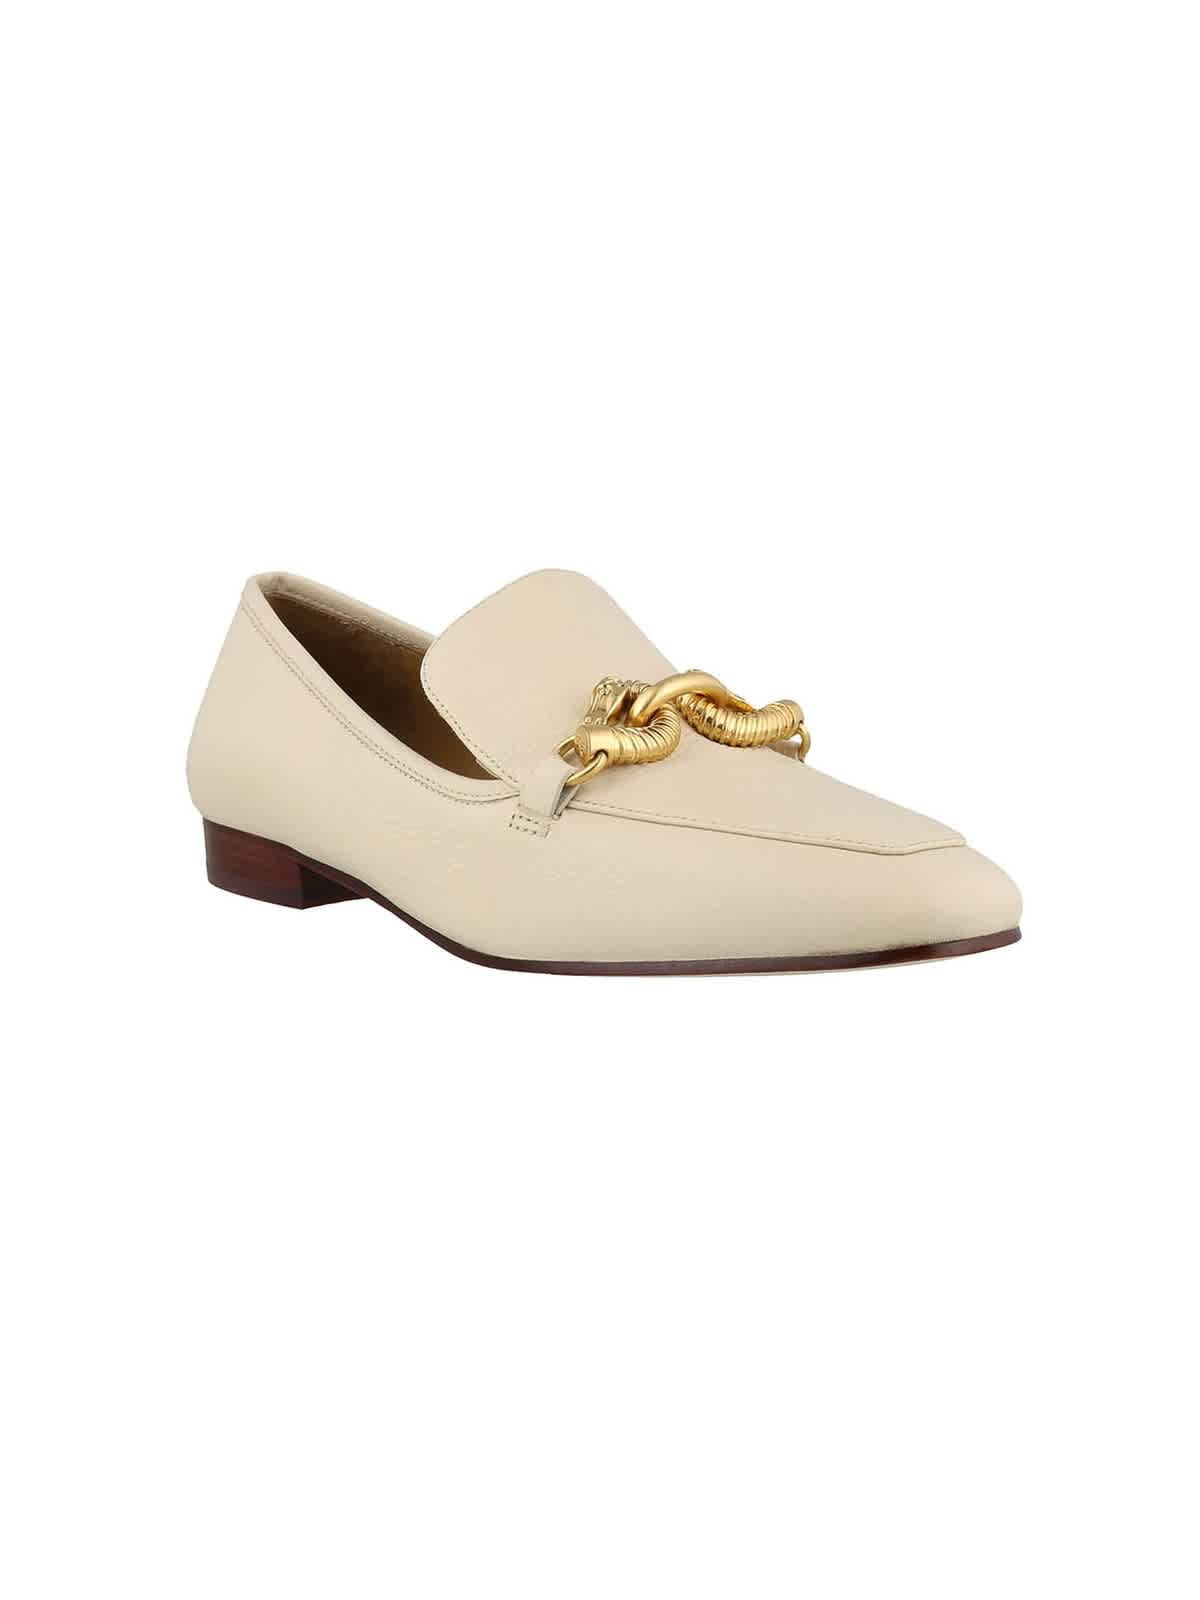 Tory Burch Jessa White Loafers, Brand Size 7 